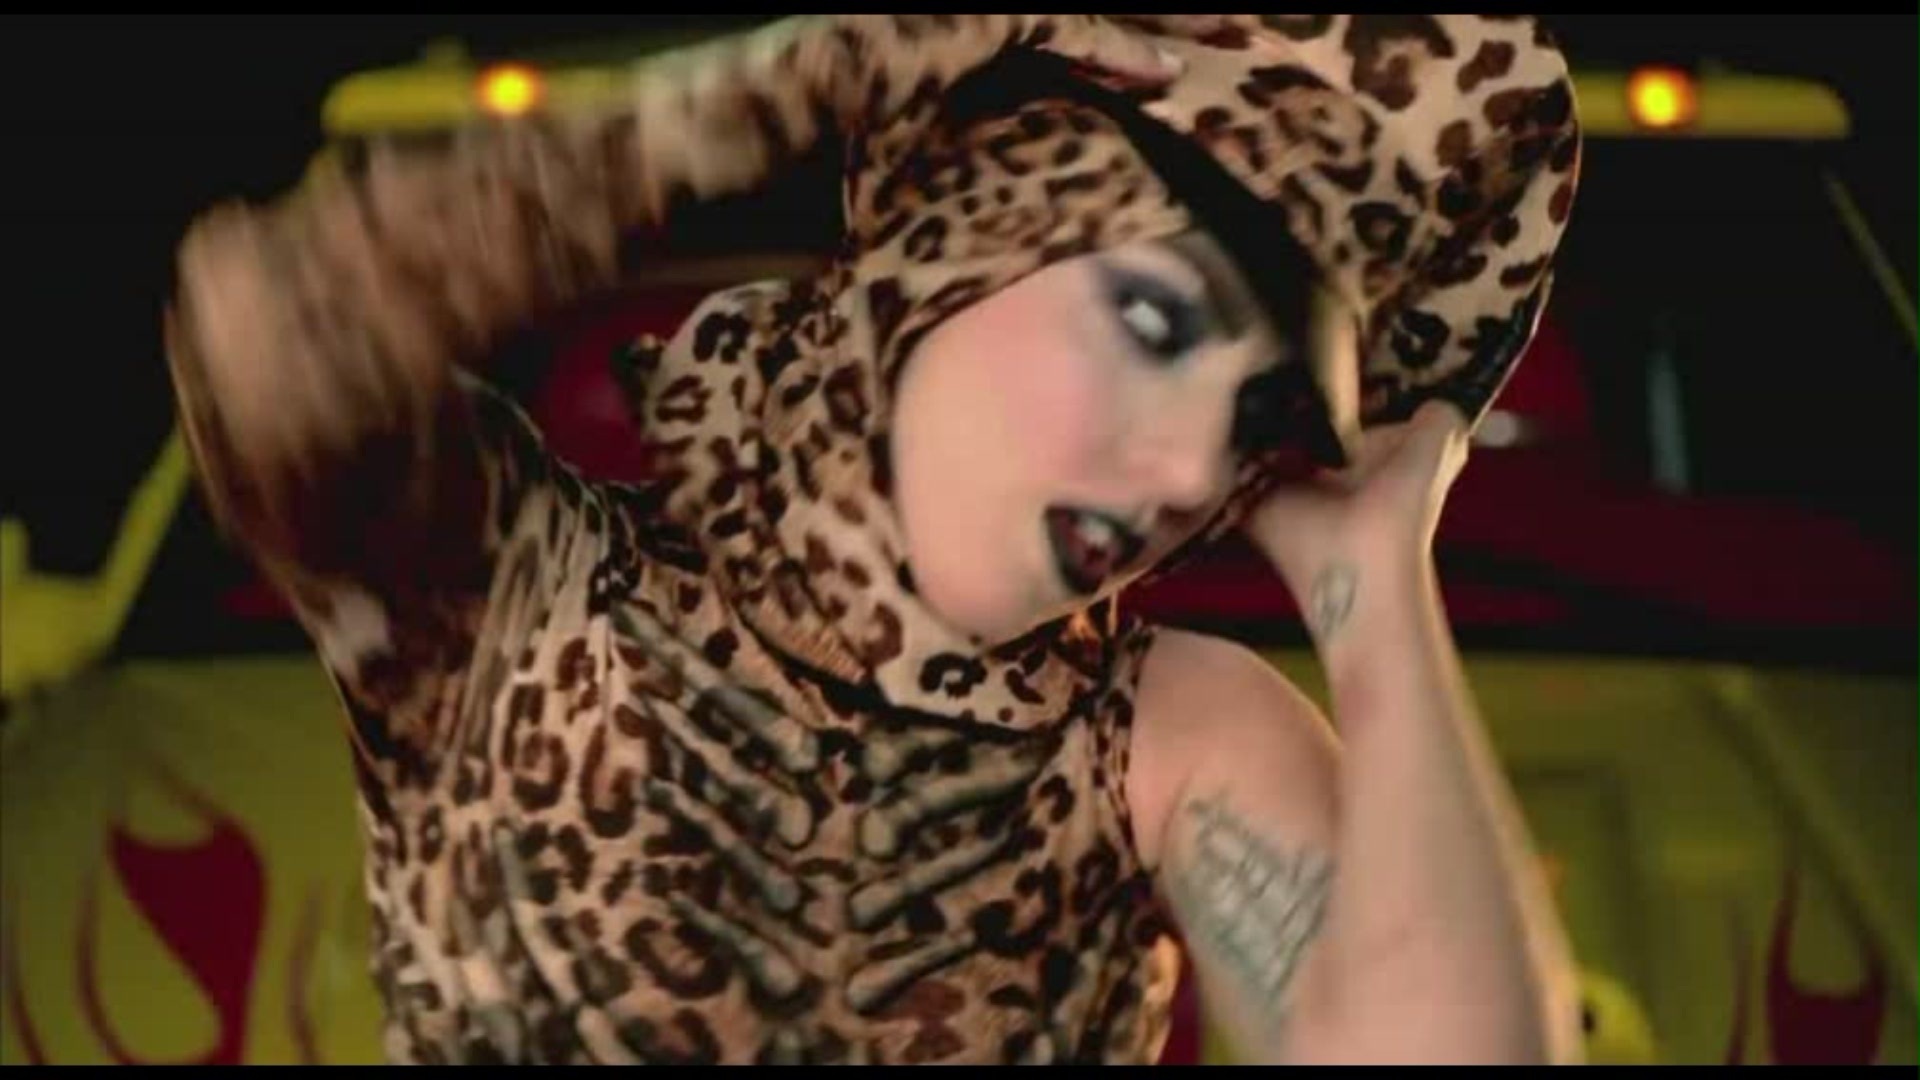 Lady GaGa - Telephone - Music Videos Image (10998378) - Fanpop1920 x 1080